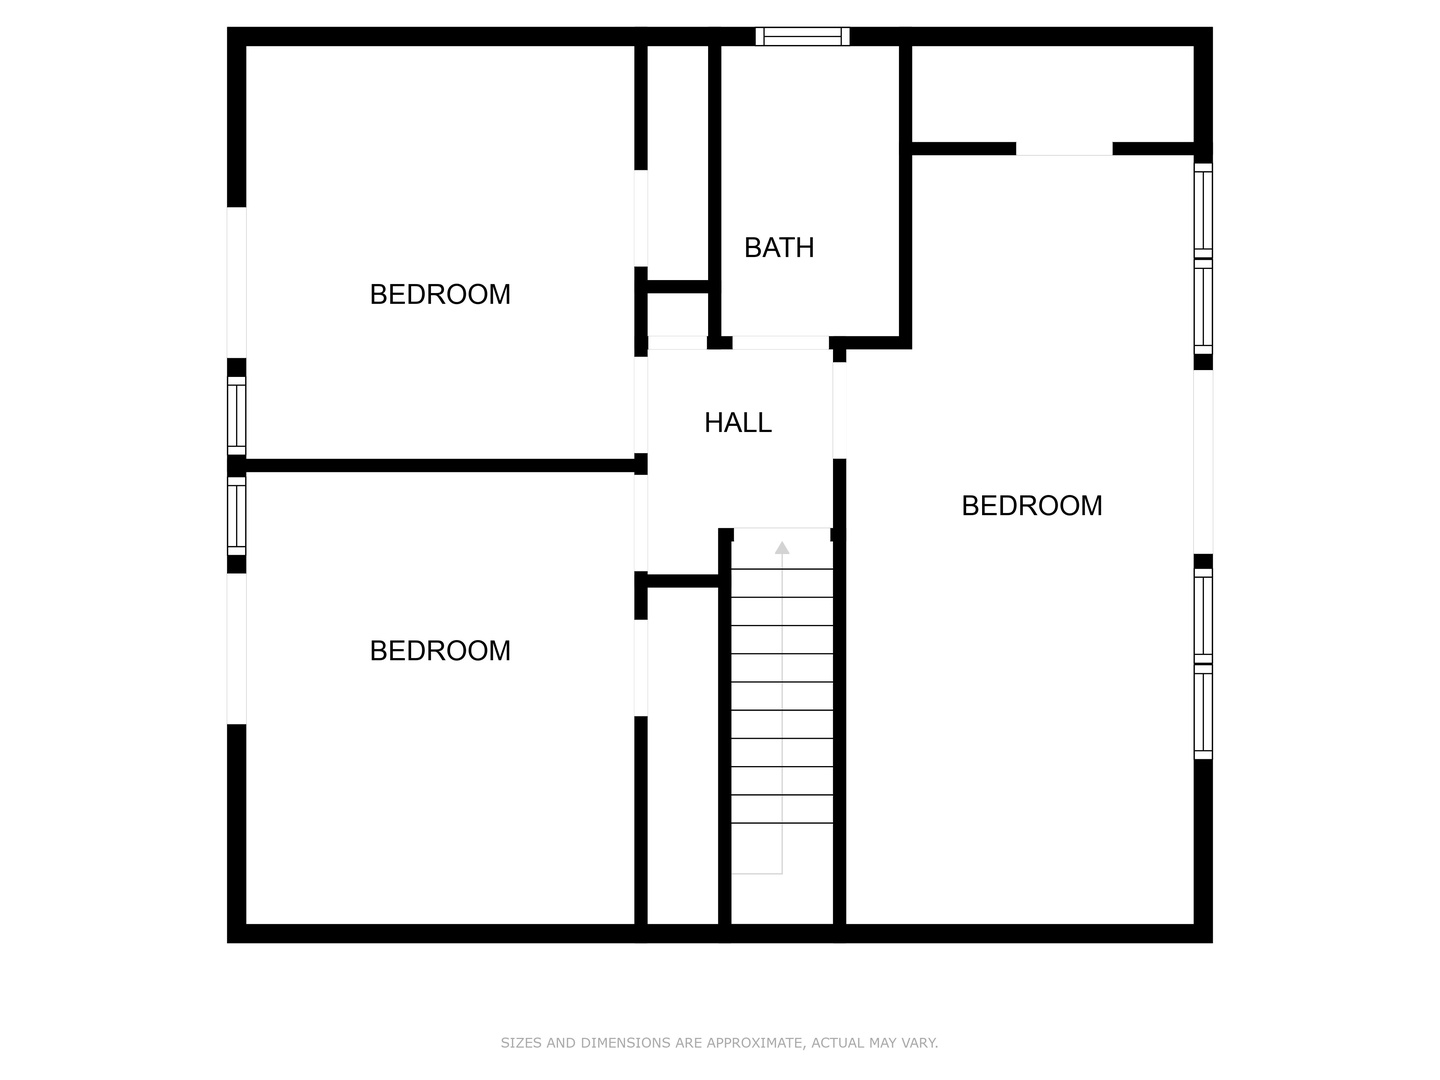 3rd floor layout